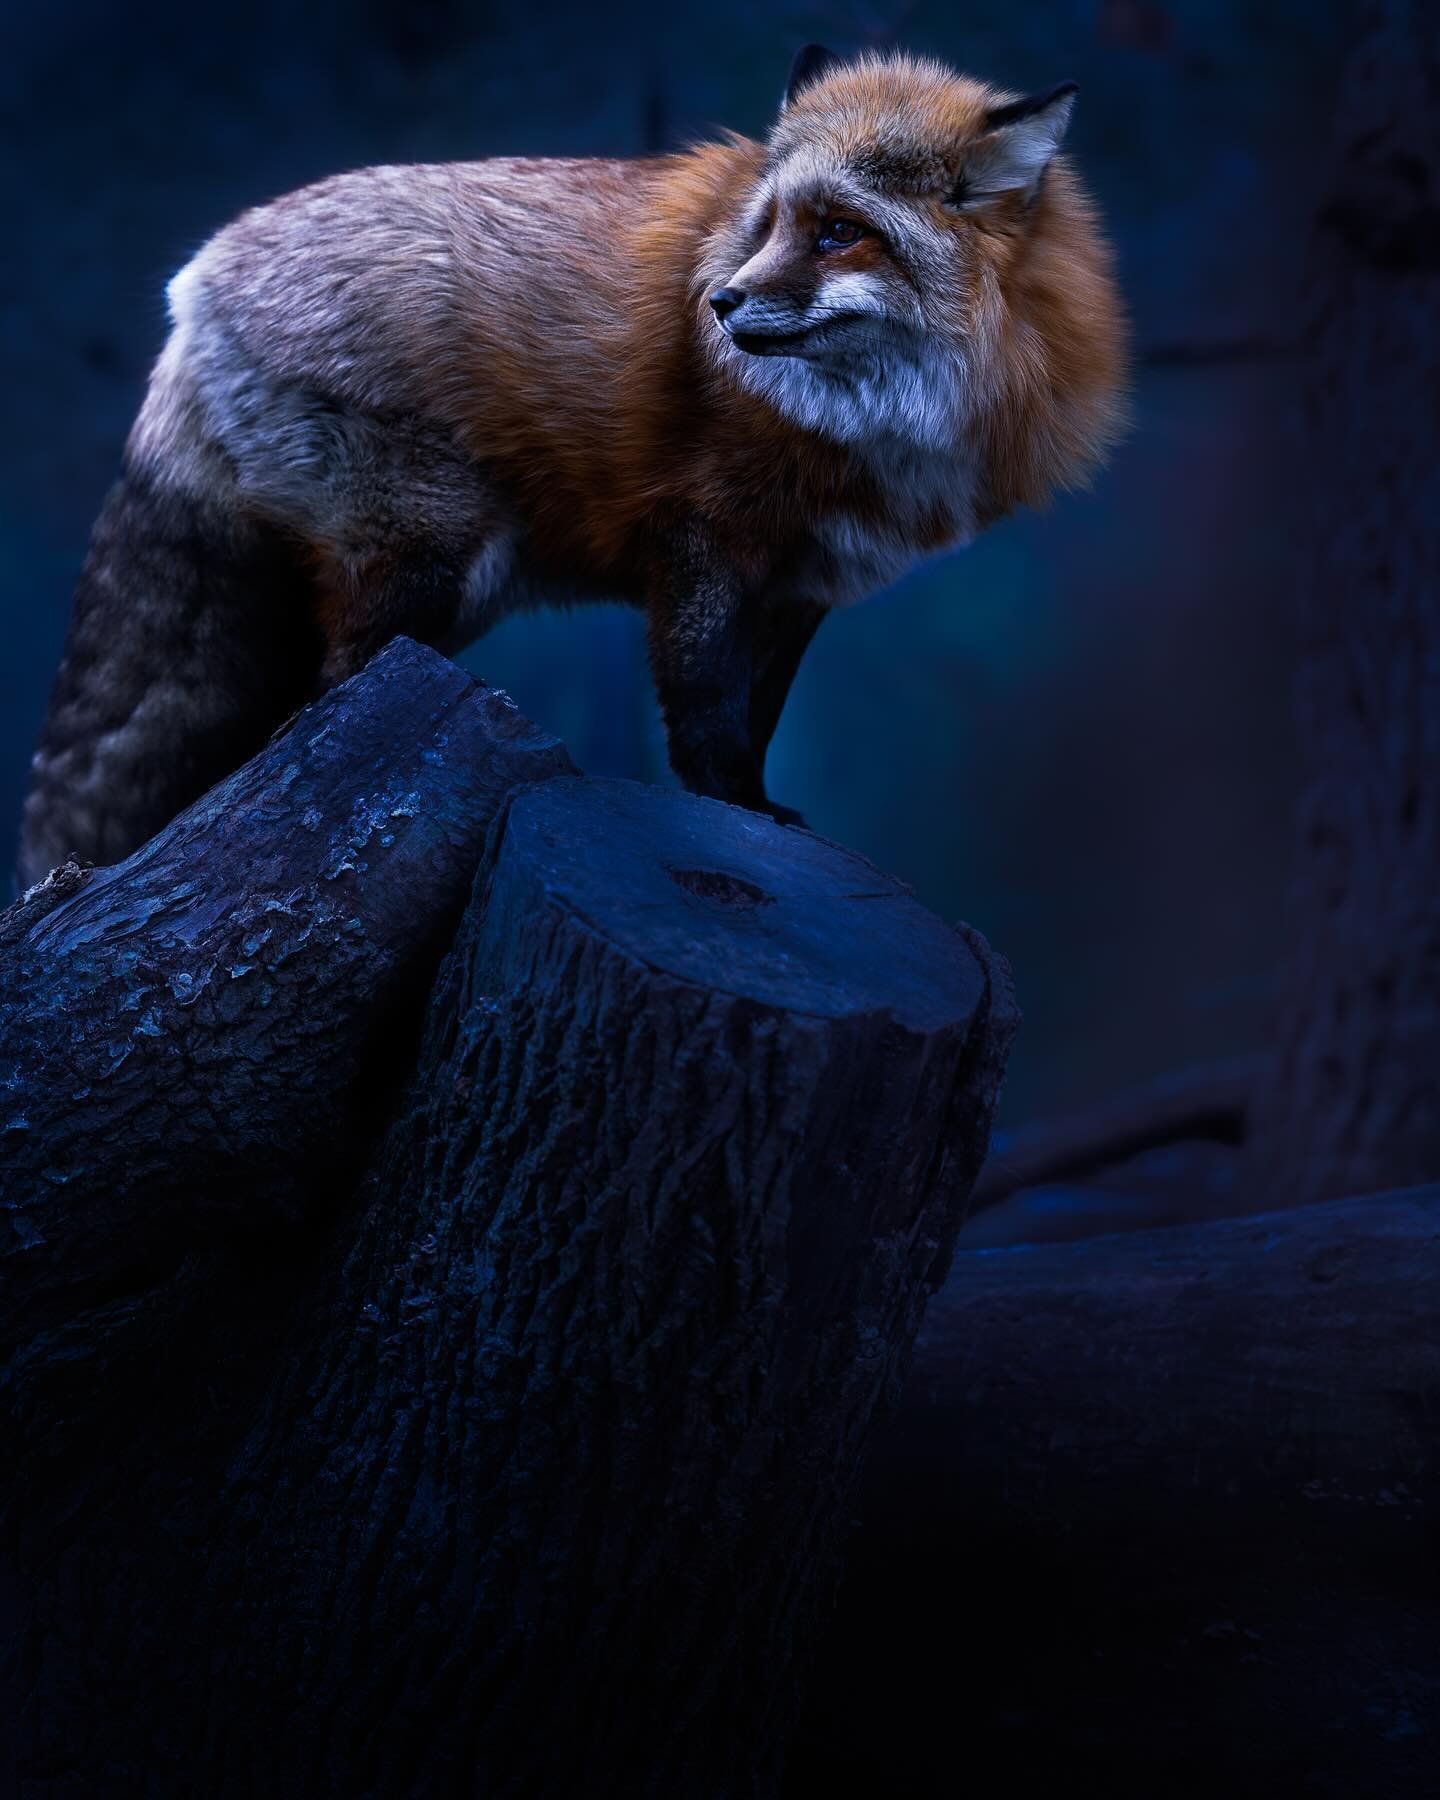 #redfox #fox #wildlife #wildlifephotography #wildlifeonearth